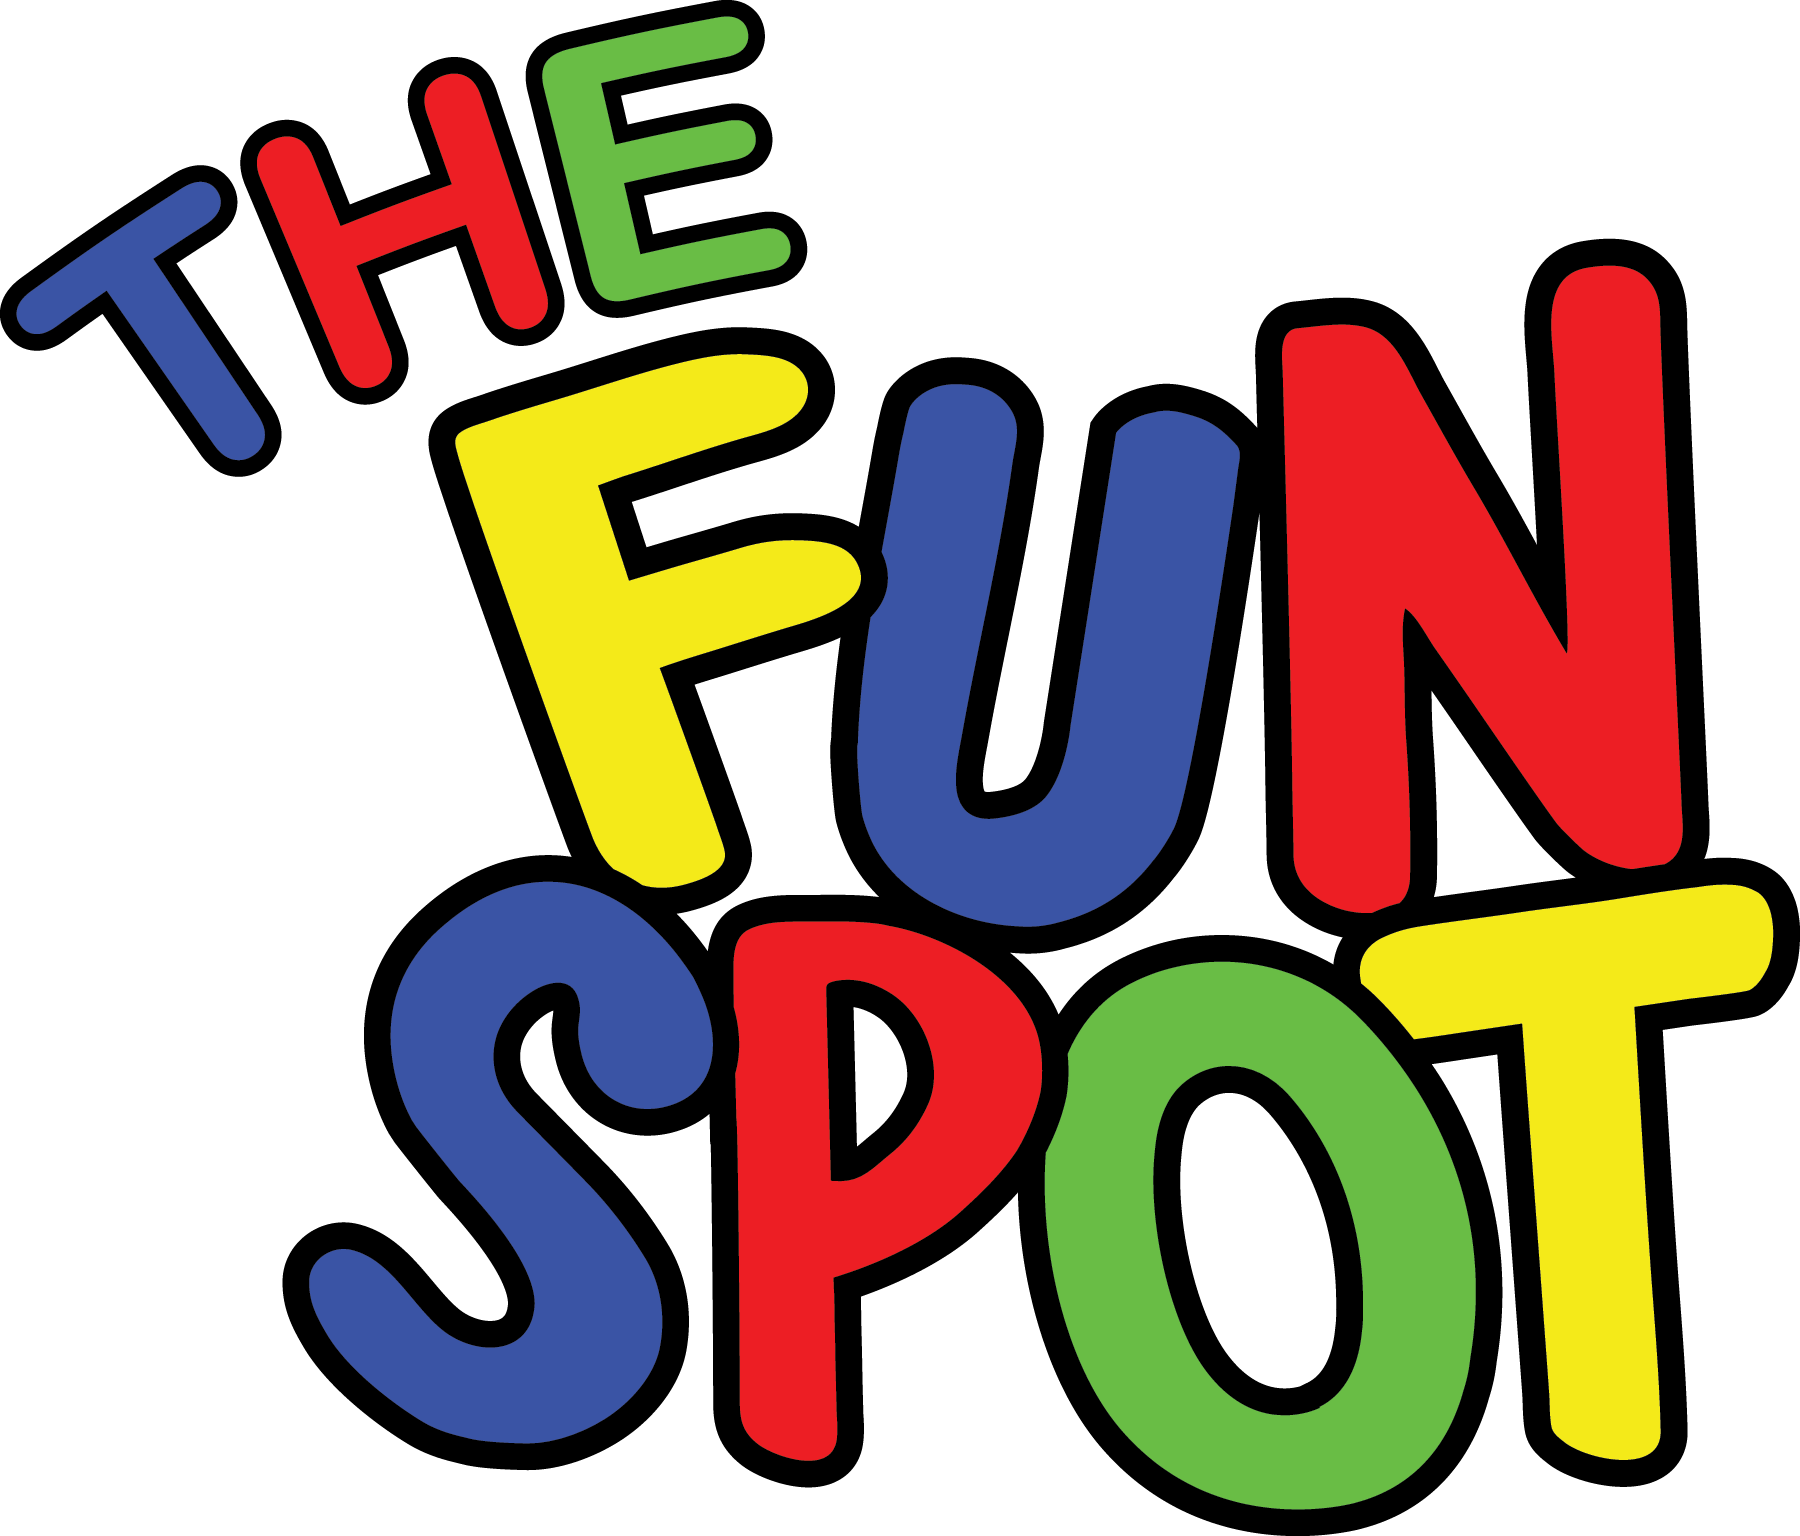 Funspot-3 - Fun Spot Queensbury (1800x1536)